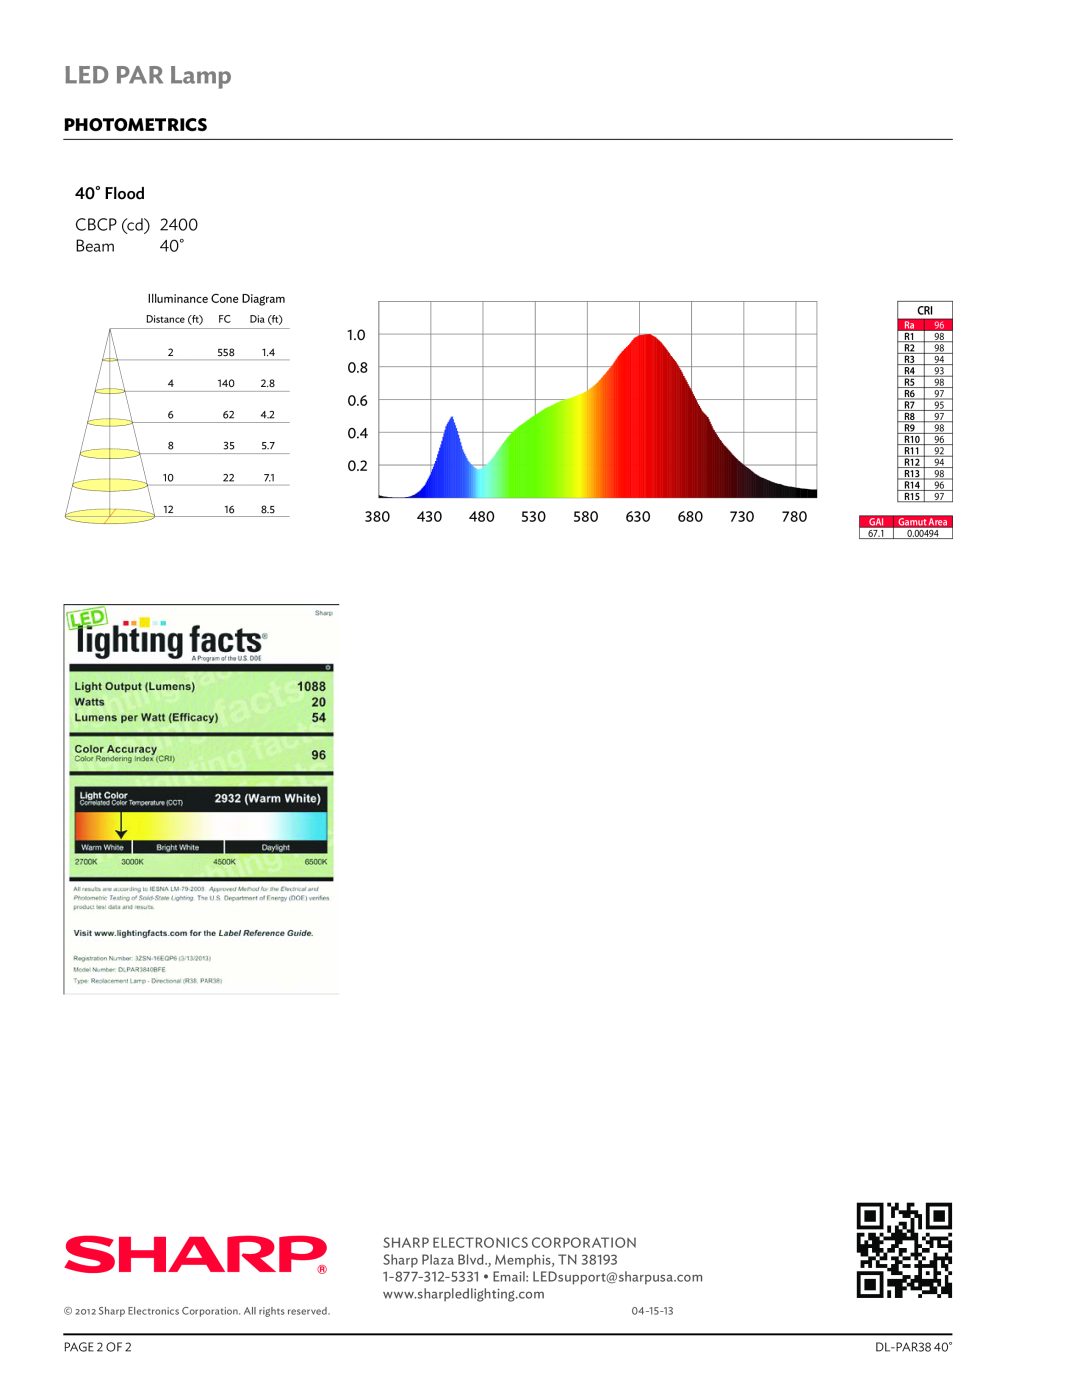 Sharp warranty 40˚ Flood CBCP cd Beam 40˚, LED PAR Lamp, Photometrics, Illuminance Cone Diagram, PAGE 2 OF, DL-PAR3840˚ 